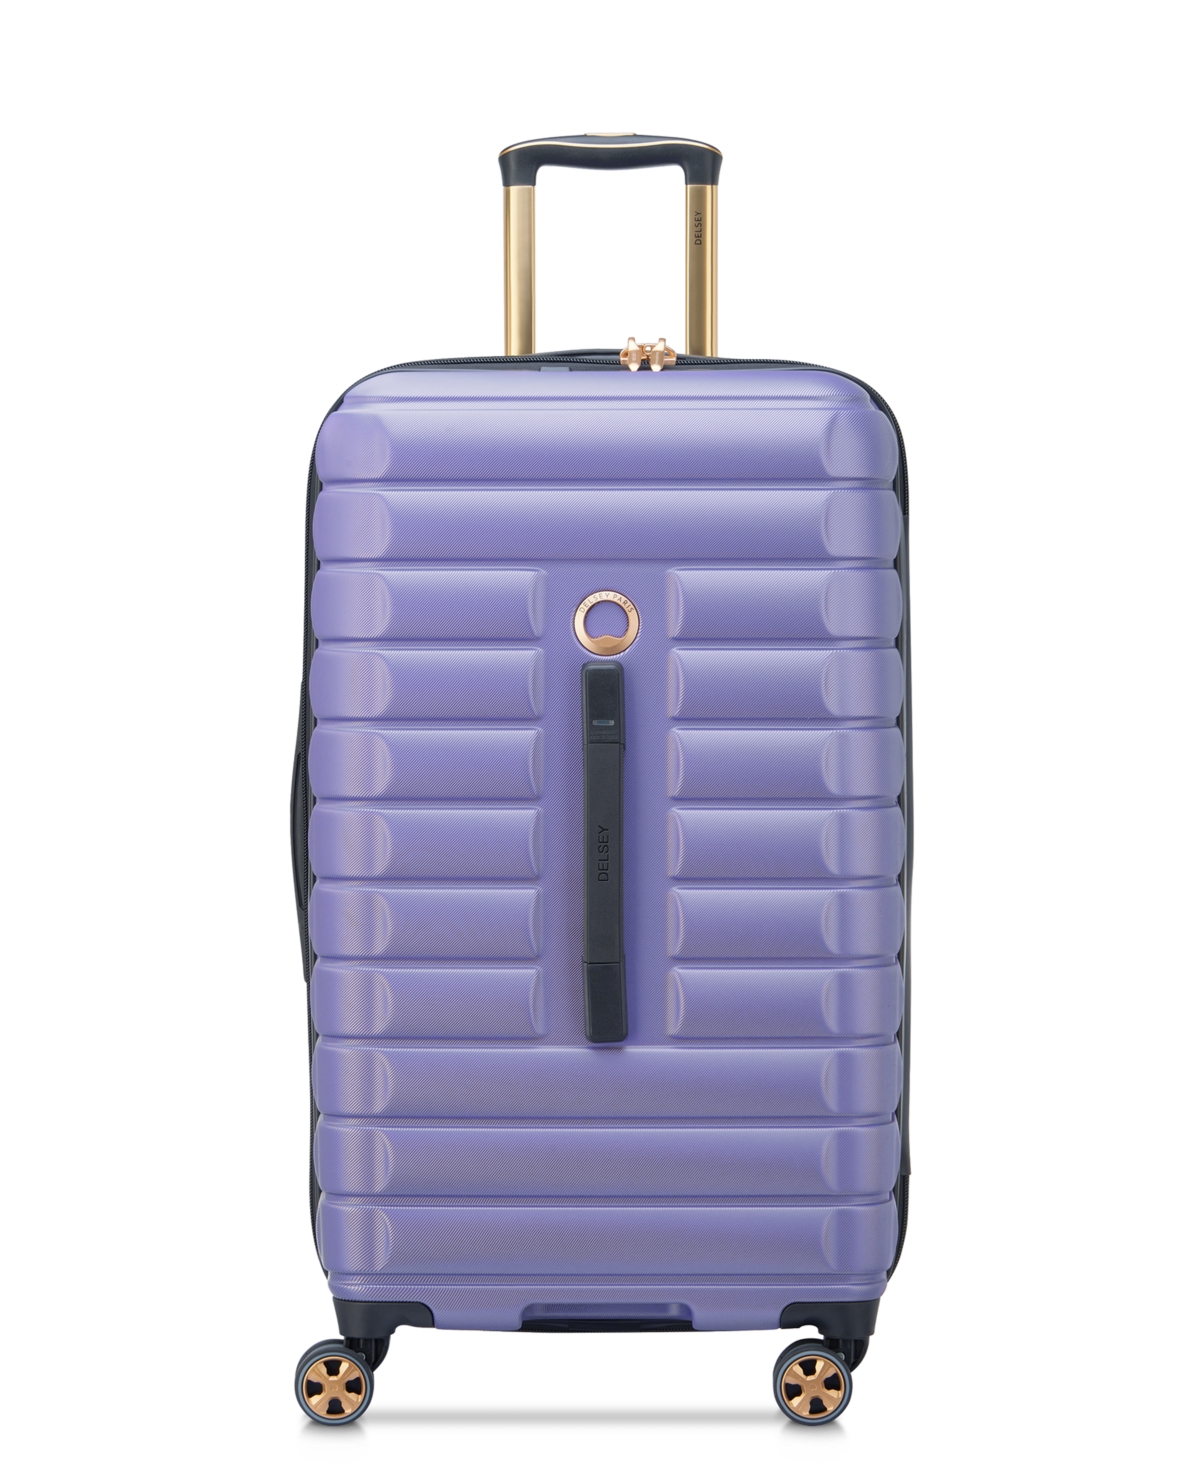 Shadow 5.0 Trunk 27" Spinner Luggage - Lilac